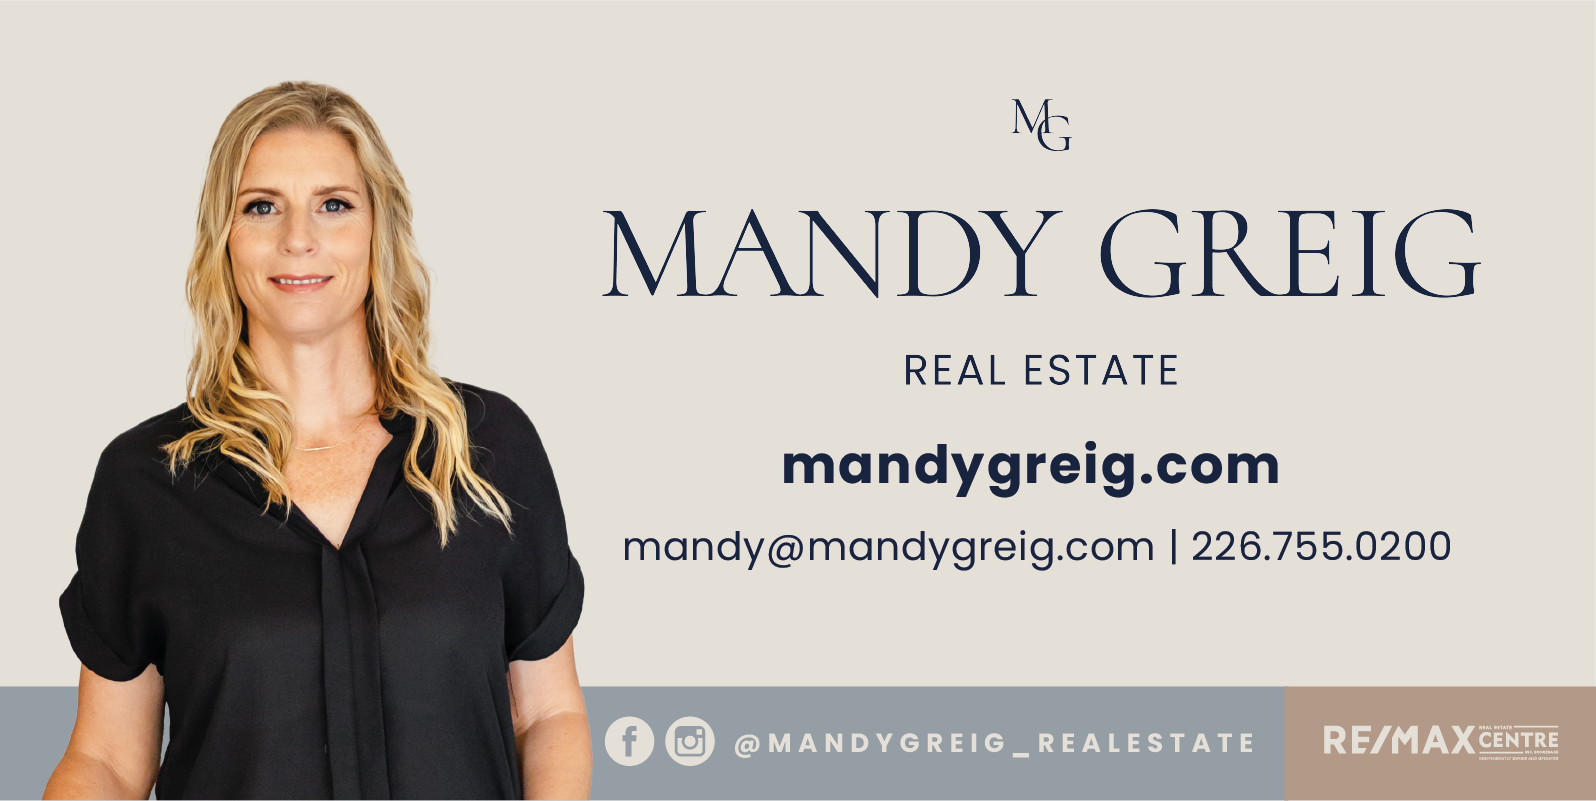 Mandy Greig Real Estate